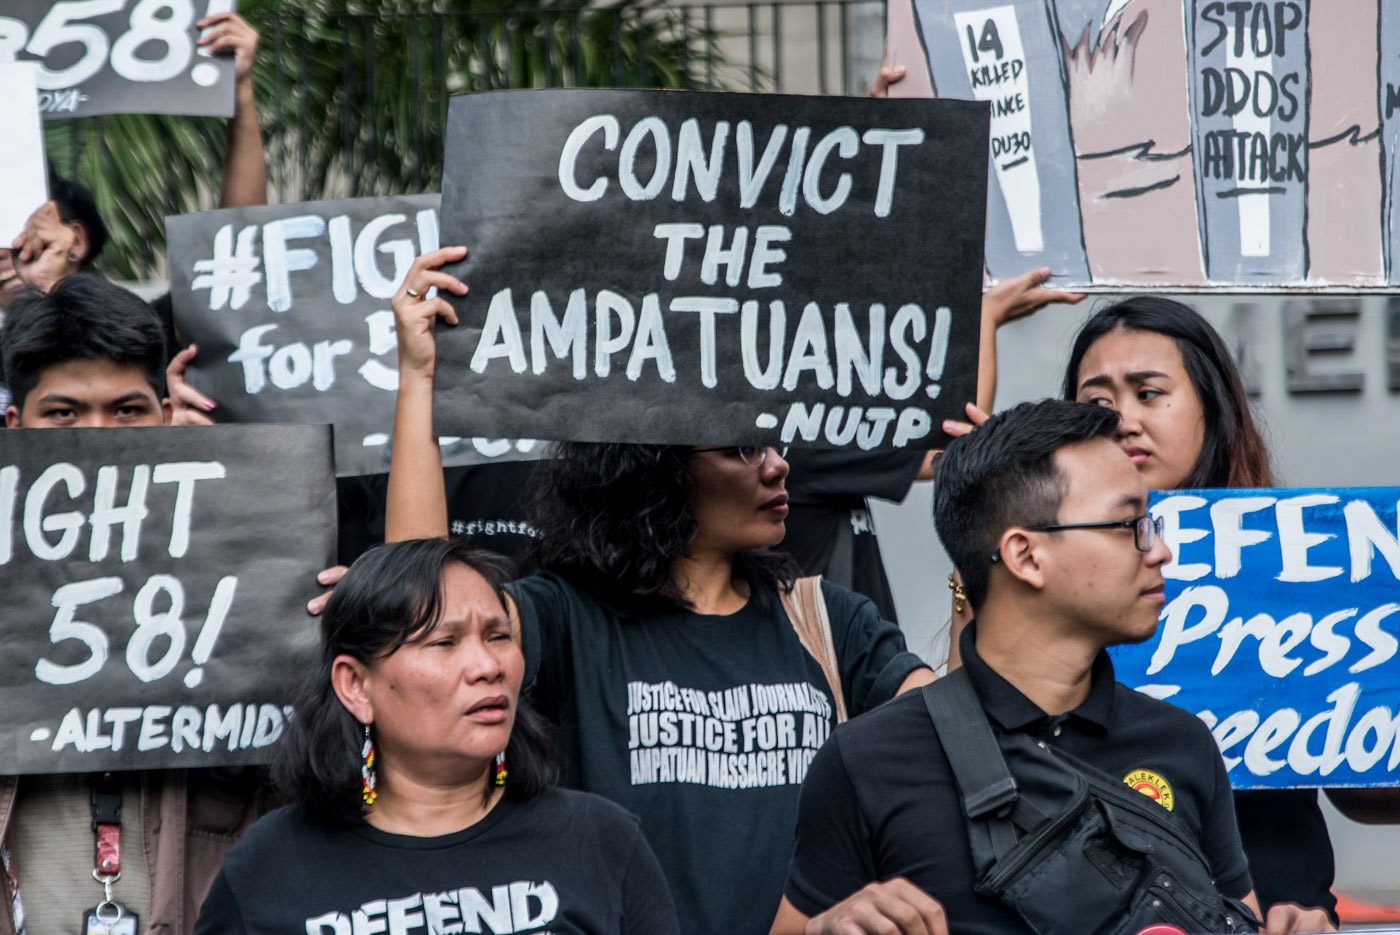 Supreme Court allows live coverage of Ampatuan massacre judgment